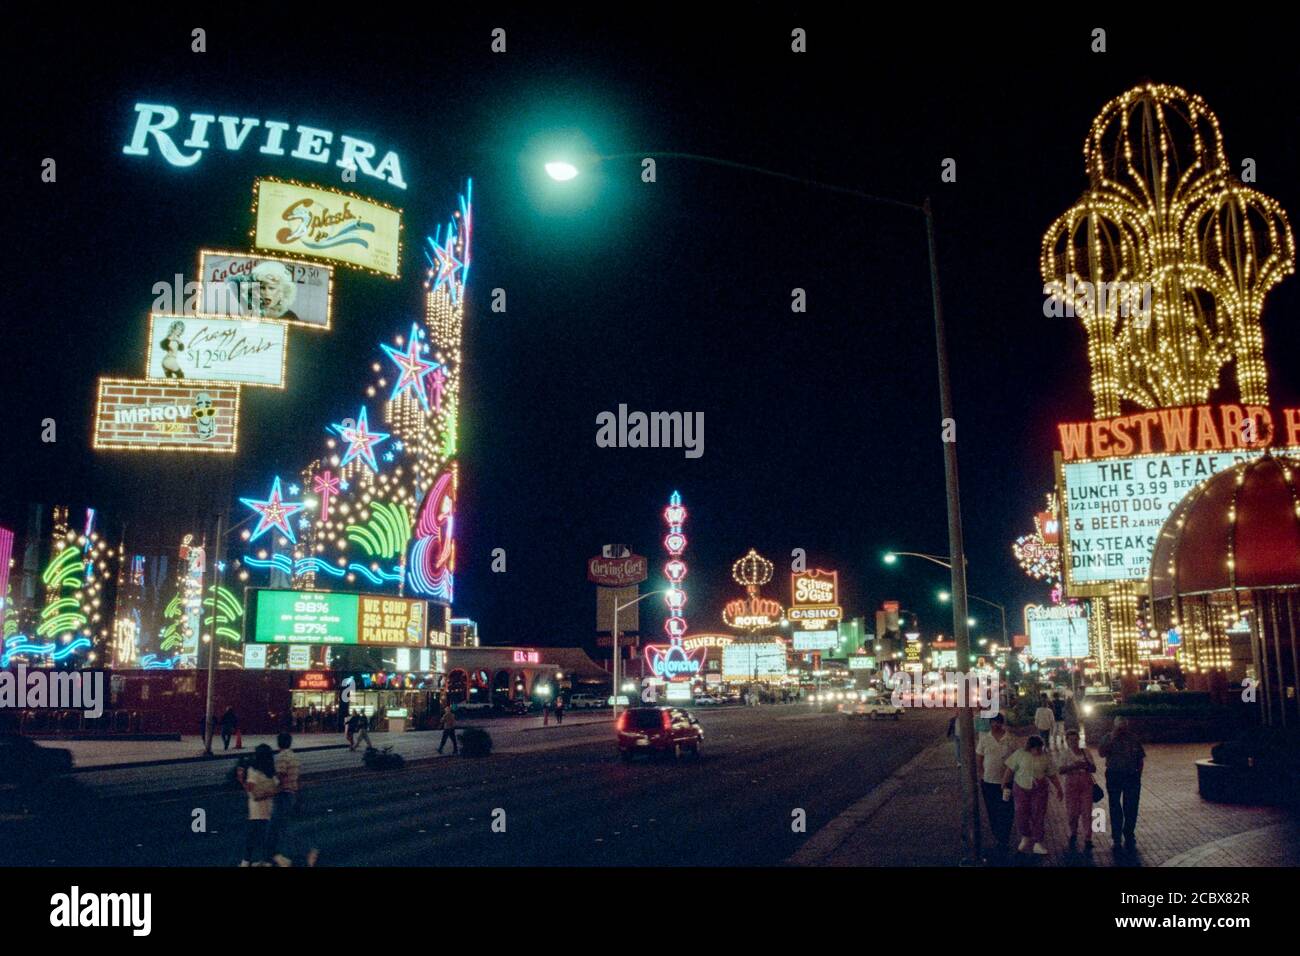 1989 Riviera Las Vegas Hotel & Casino Strip 1992 Expansion rendering  postcard NV